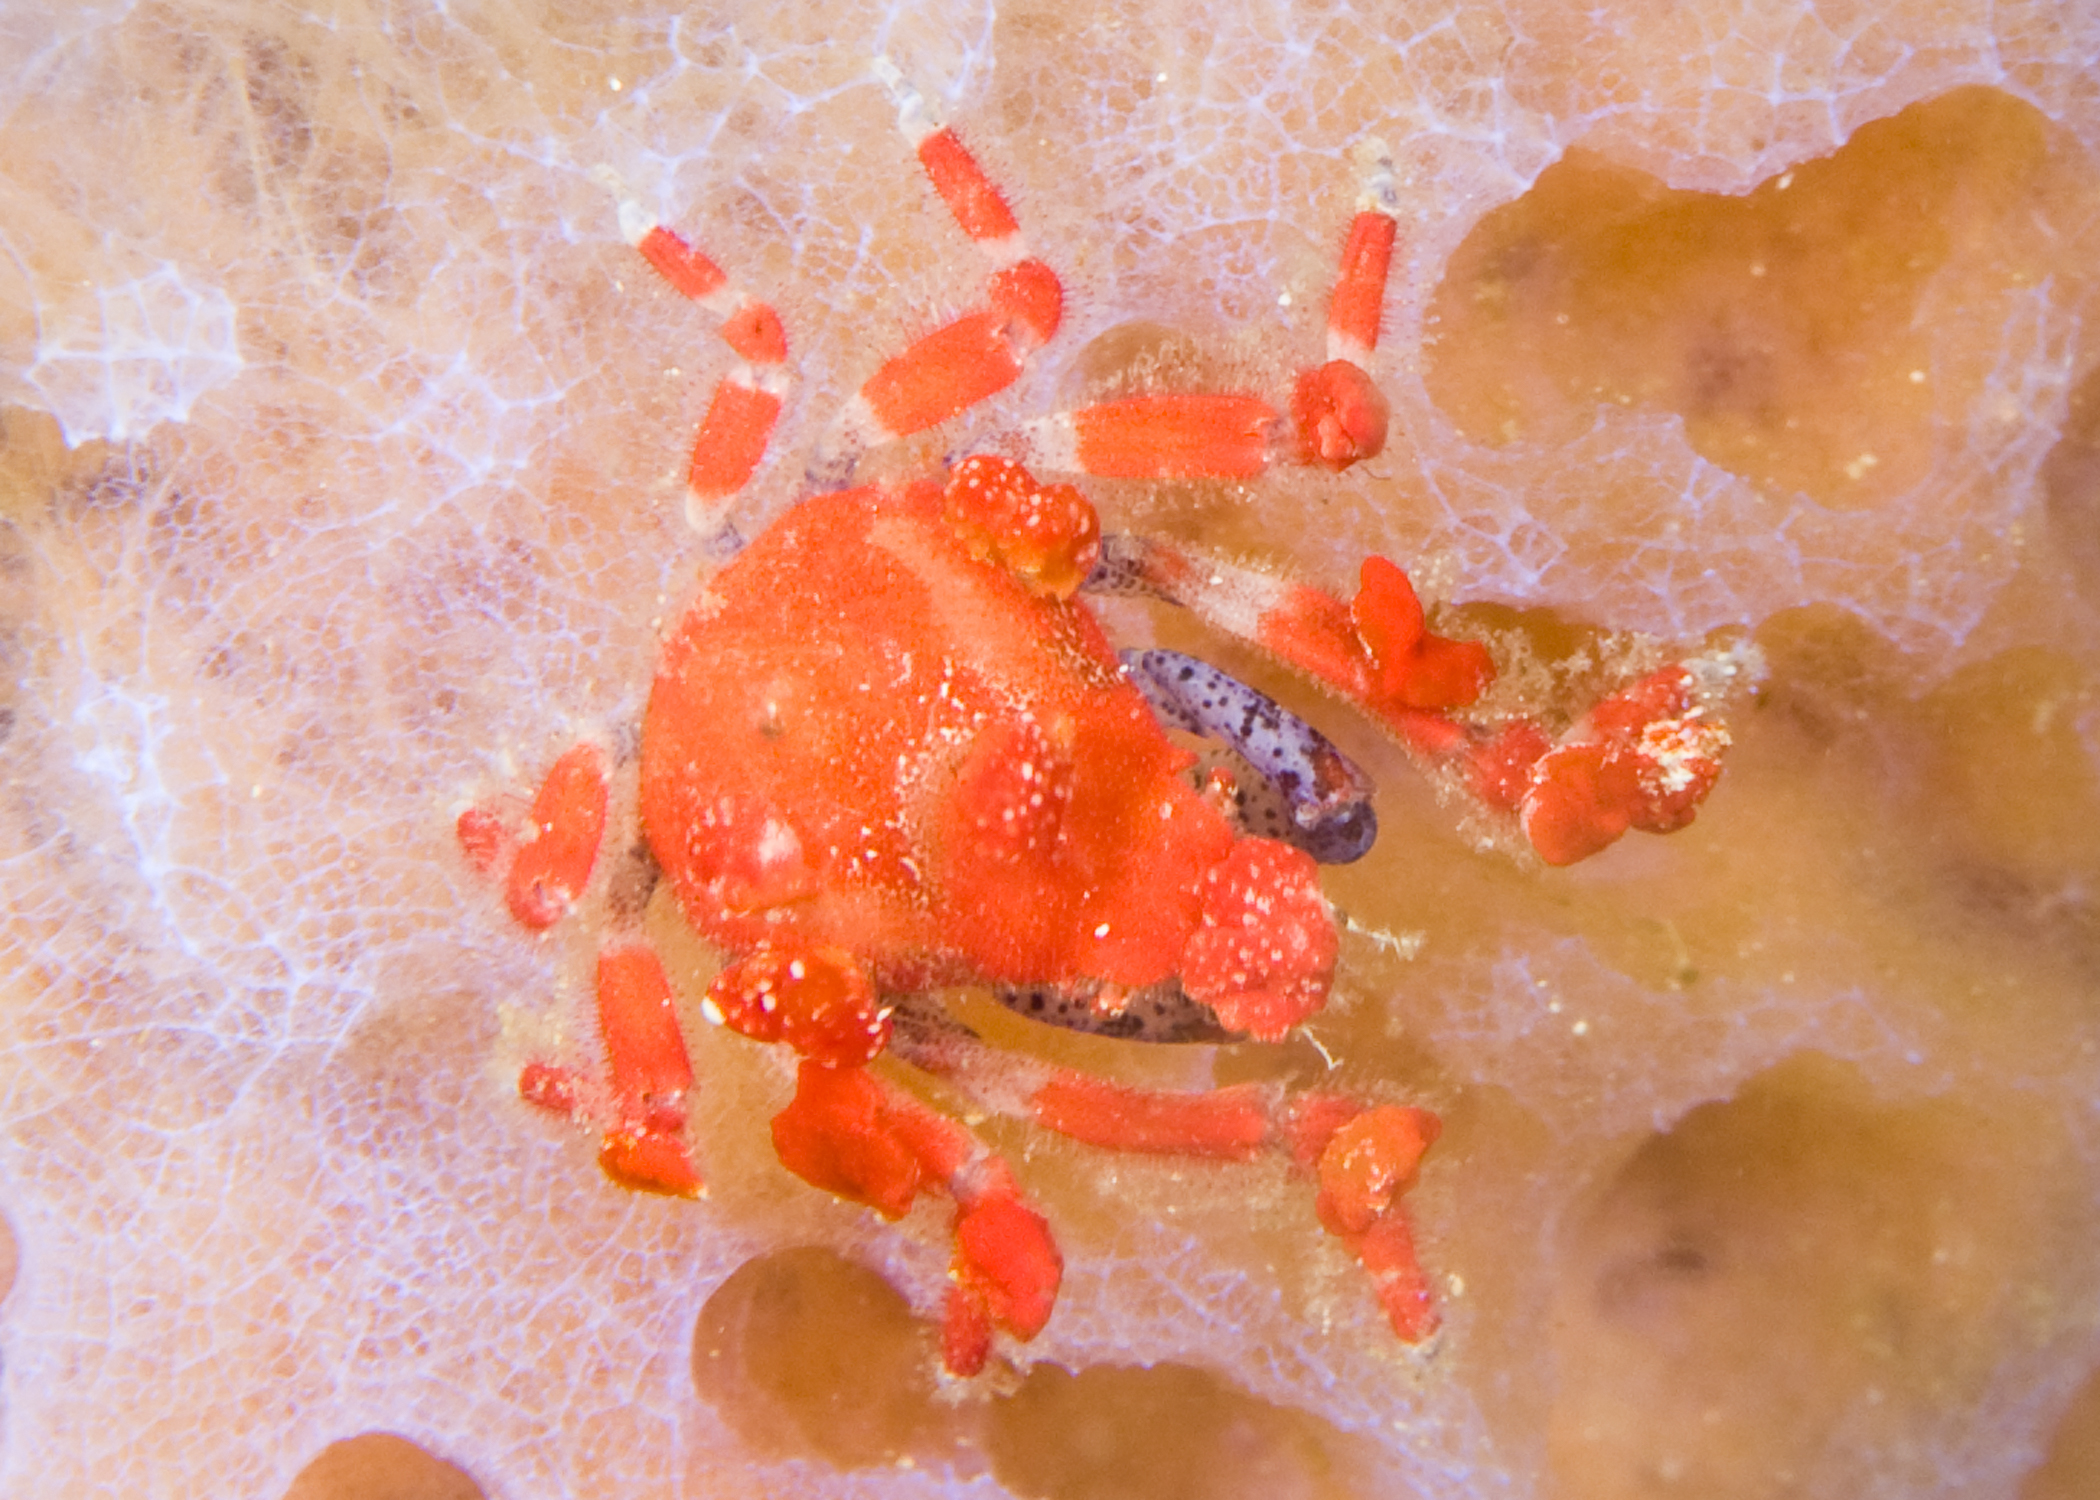 Southern teardrop crab